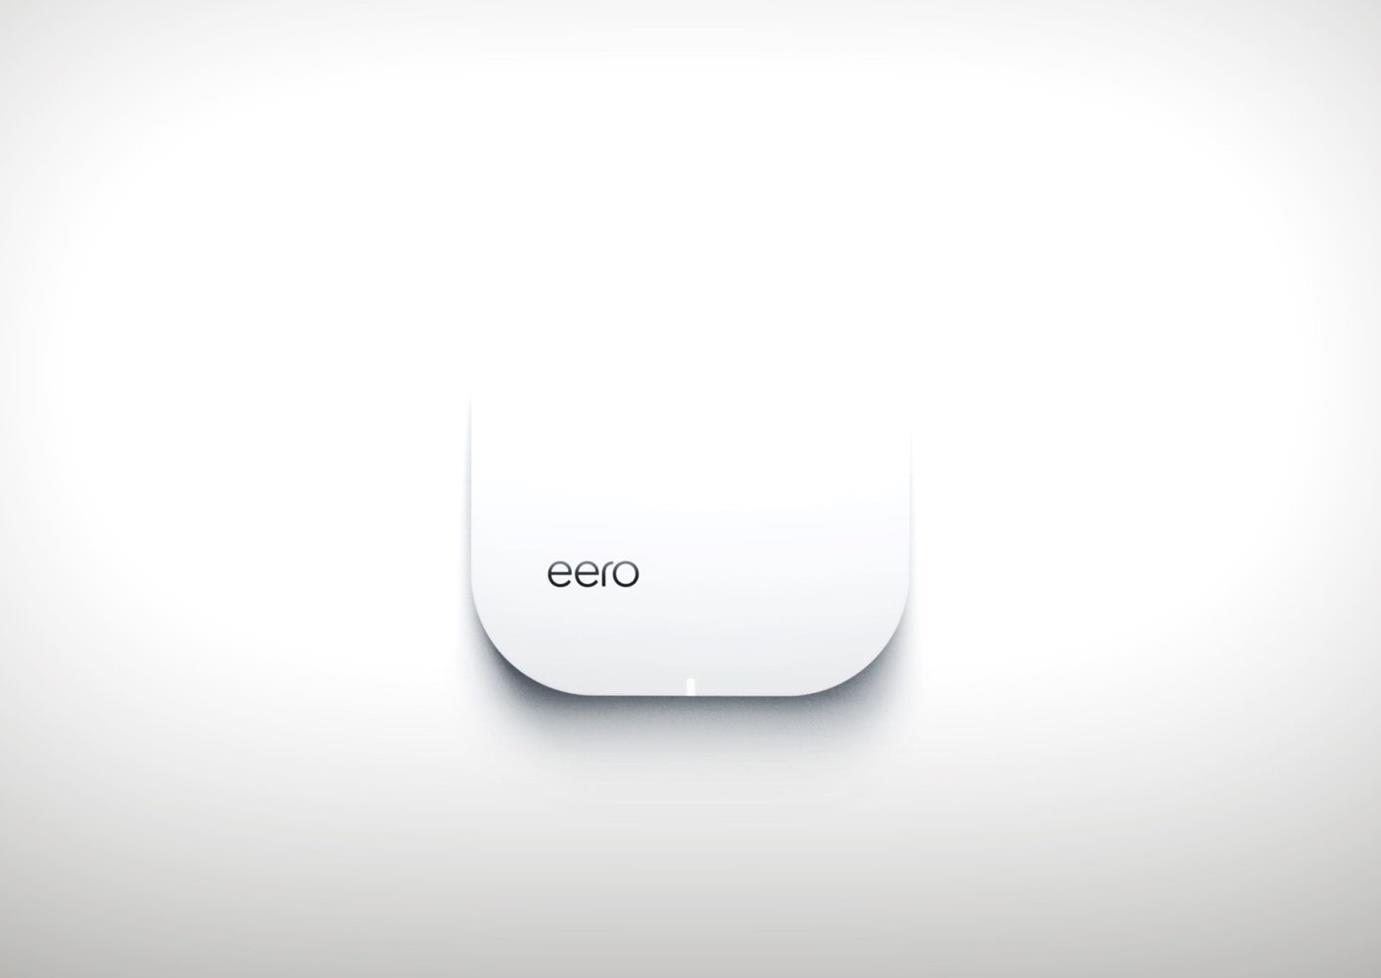 Eero va bientot mettre a niveau les routeurs WiFi equipes de la xbOt7V 2 4